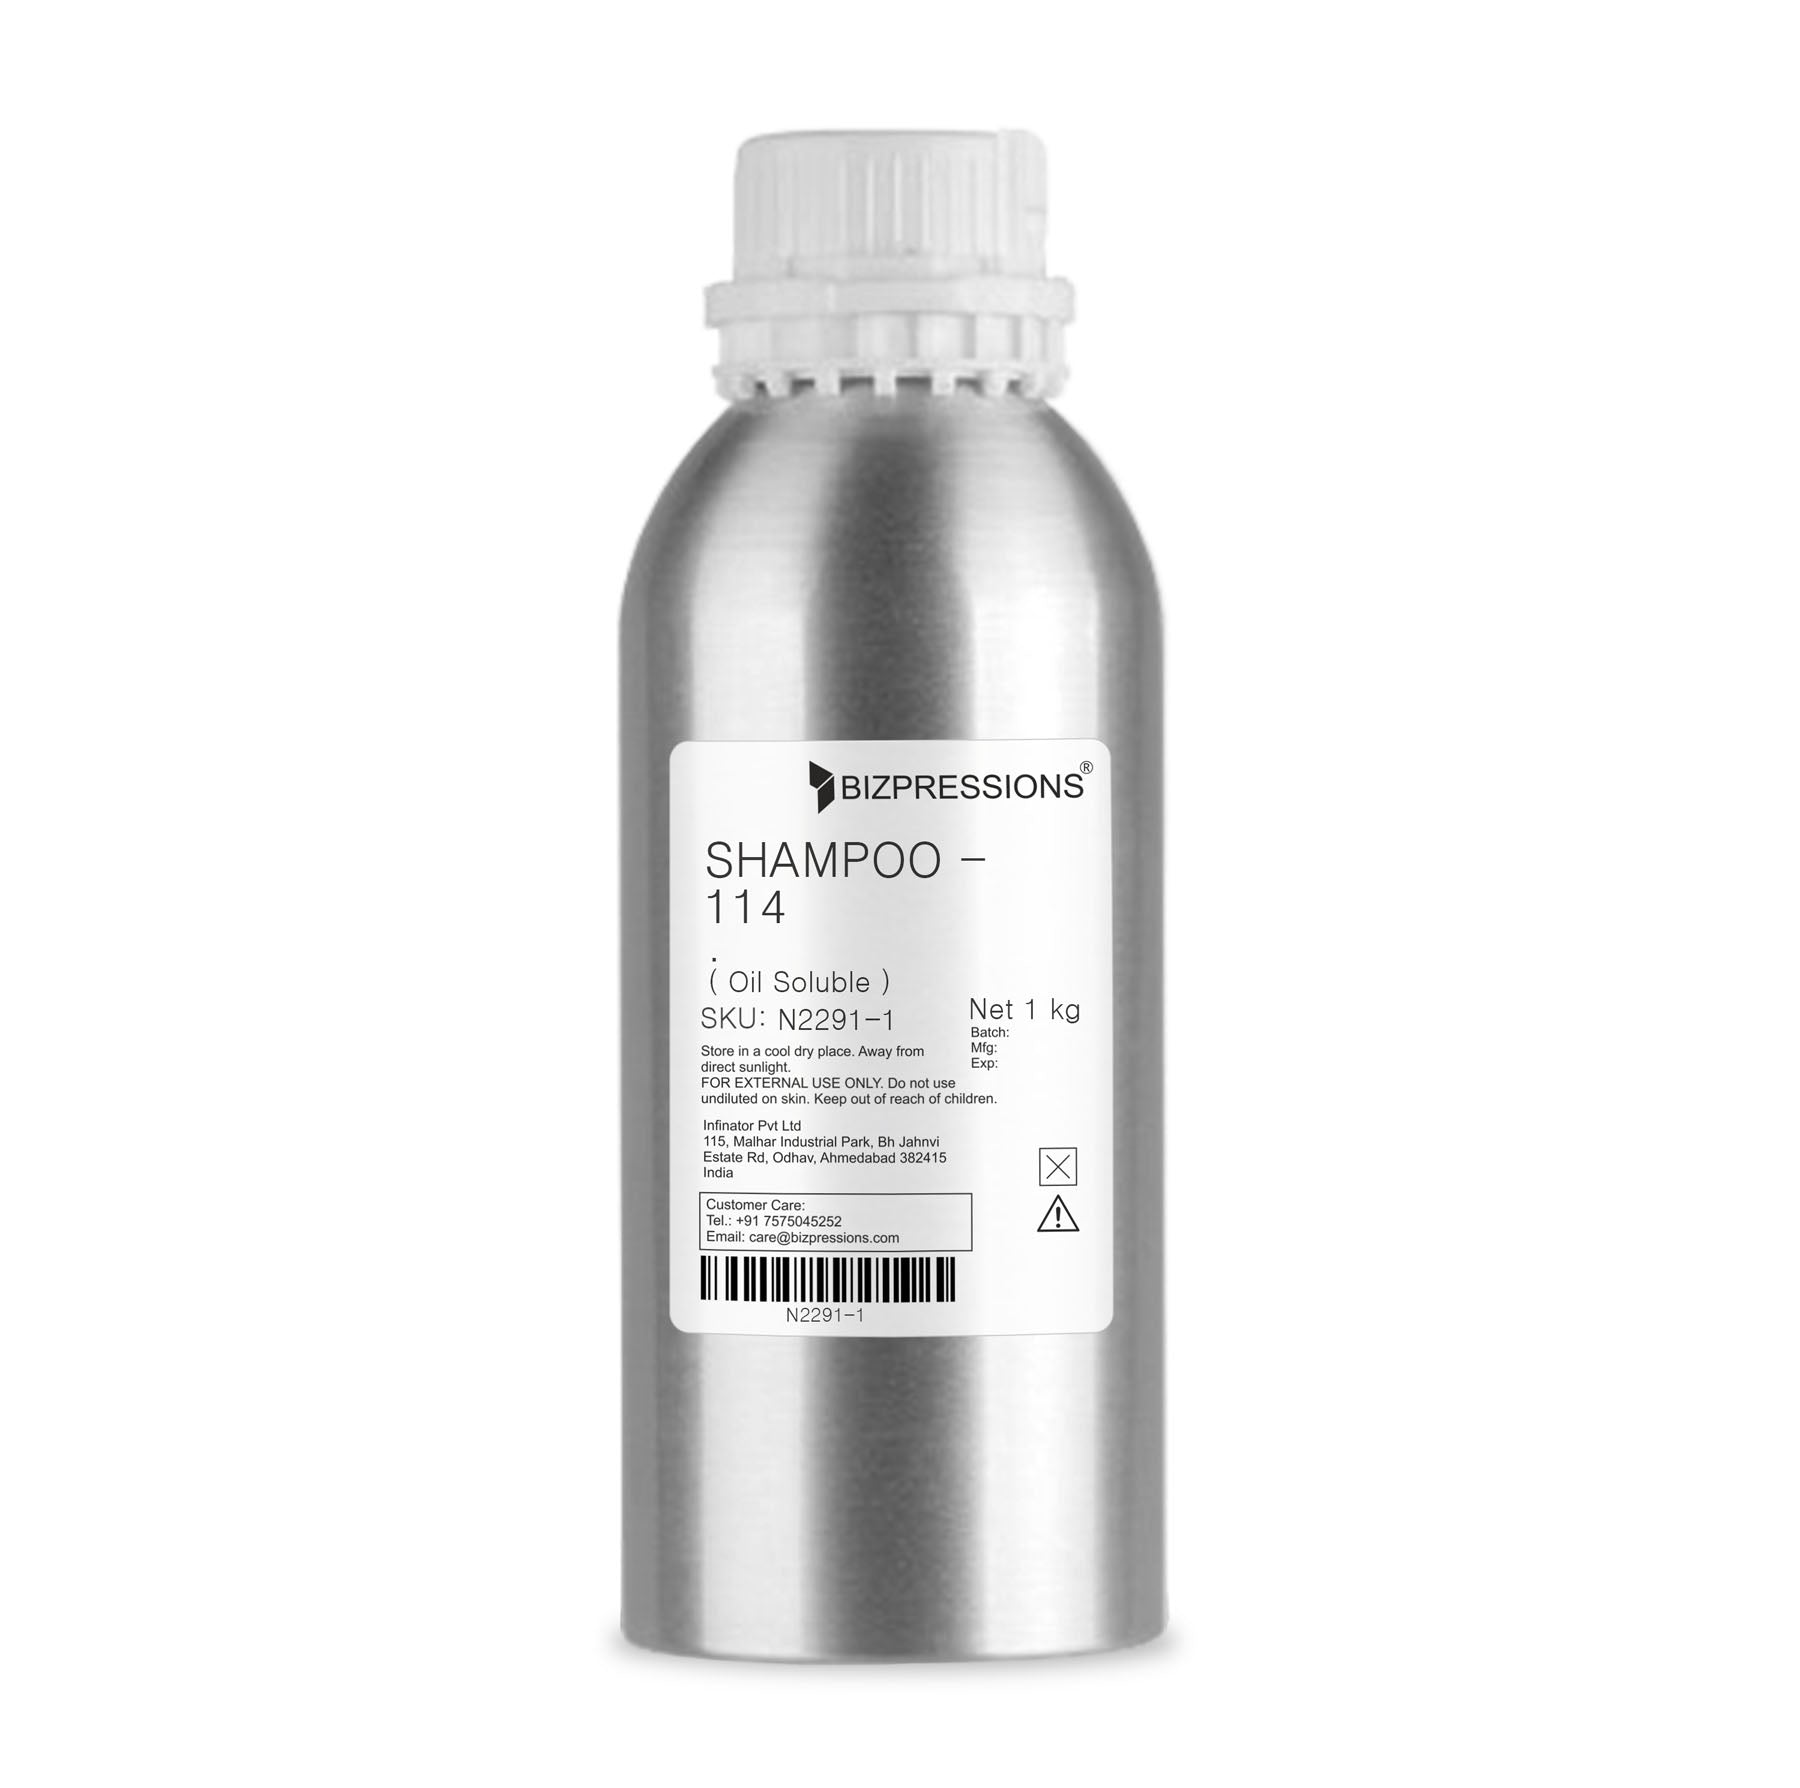 SHAMPOO - 114 - Fragrance ( Oil Soluble ) - 1 kg